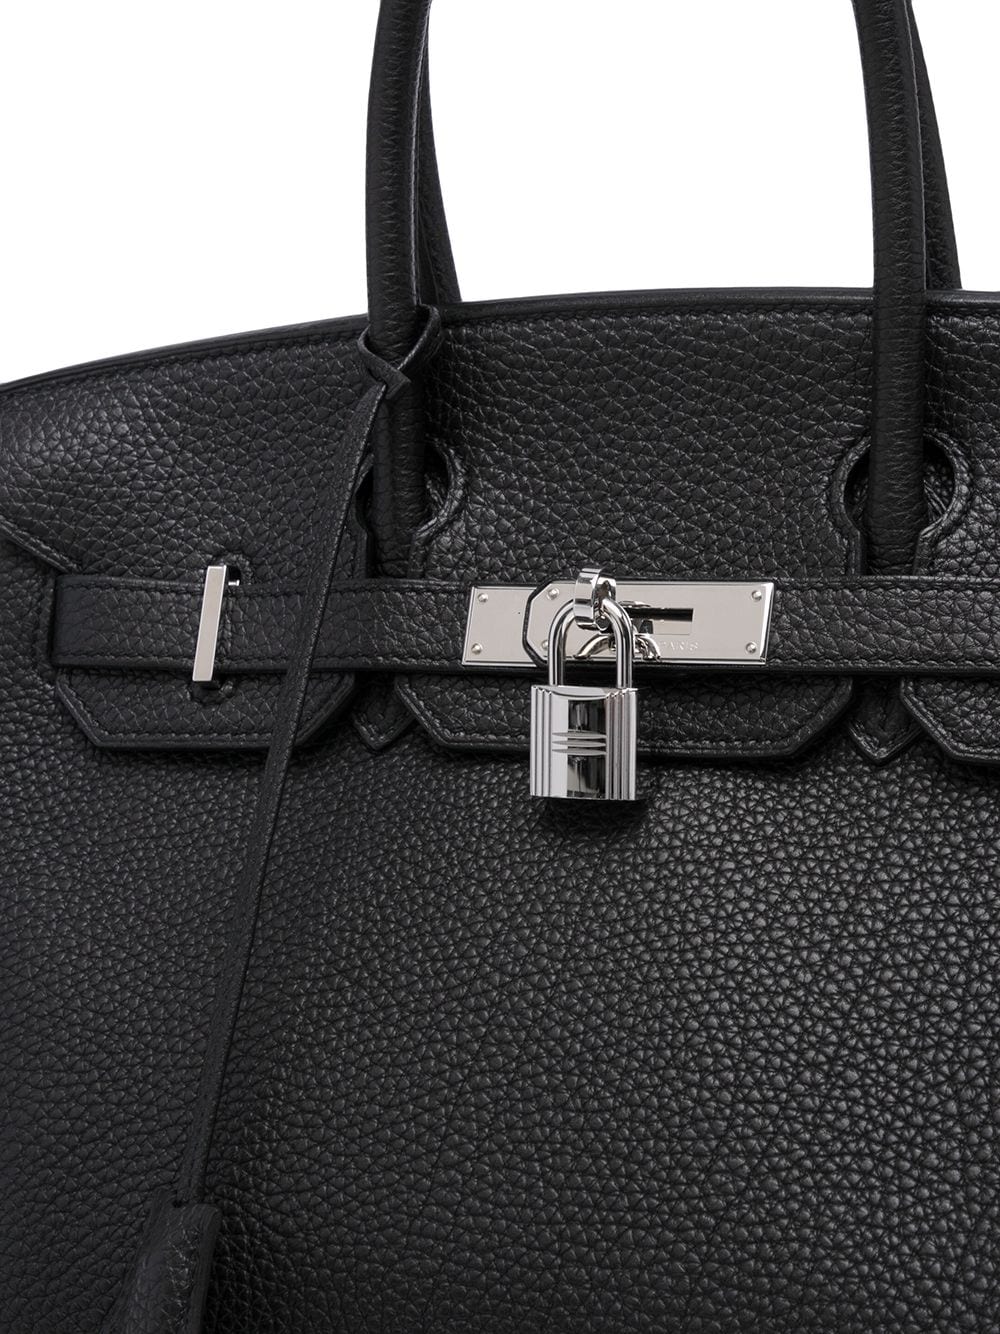 Hermès 2009 Pre-owned Birkin 30 Bag - Black